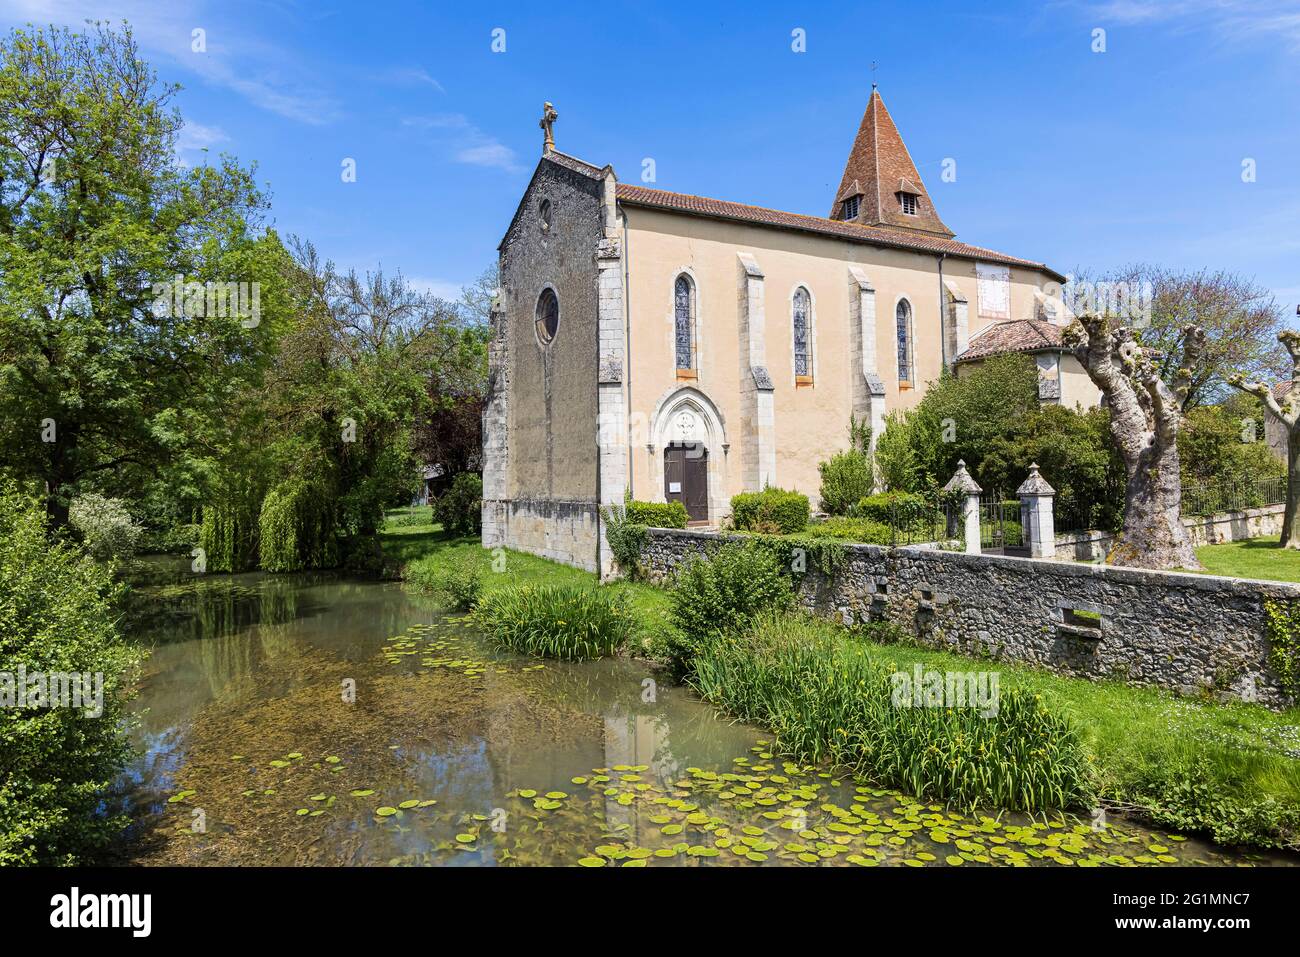 France, Gers, Fources, labelled Les Plus Beaux Villages de France (The Most Beautiful Villages of France), the church Stock Photo